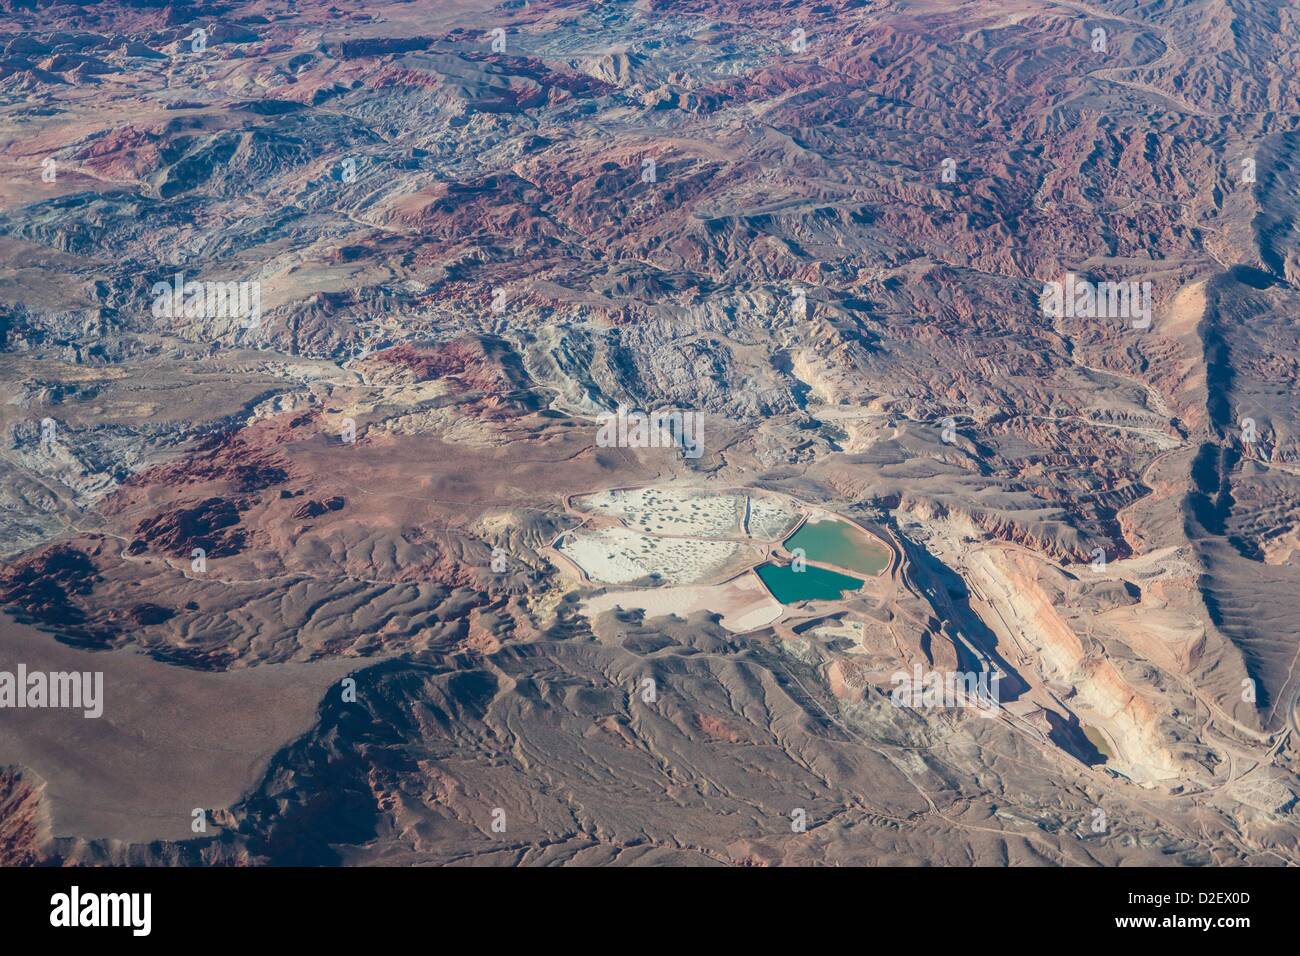 mining near Las Vegas. Stock Photo